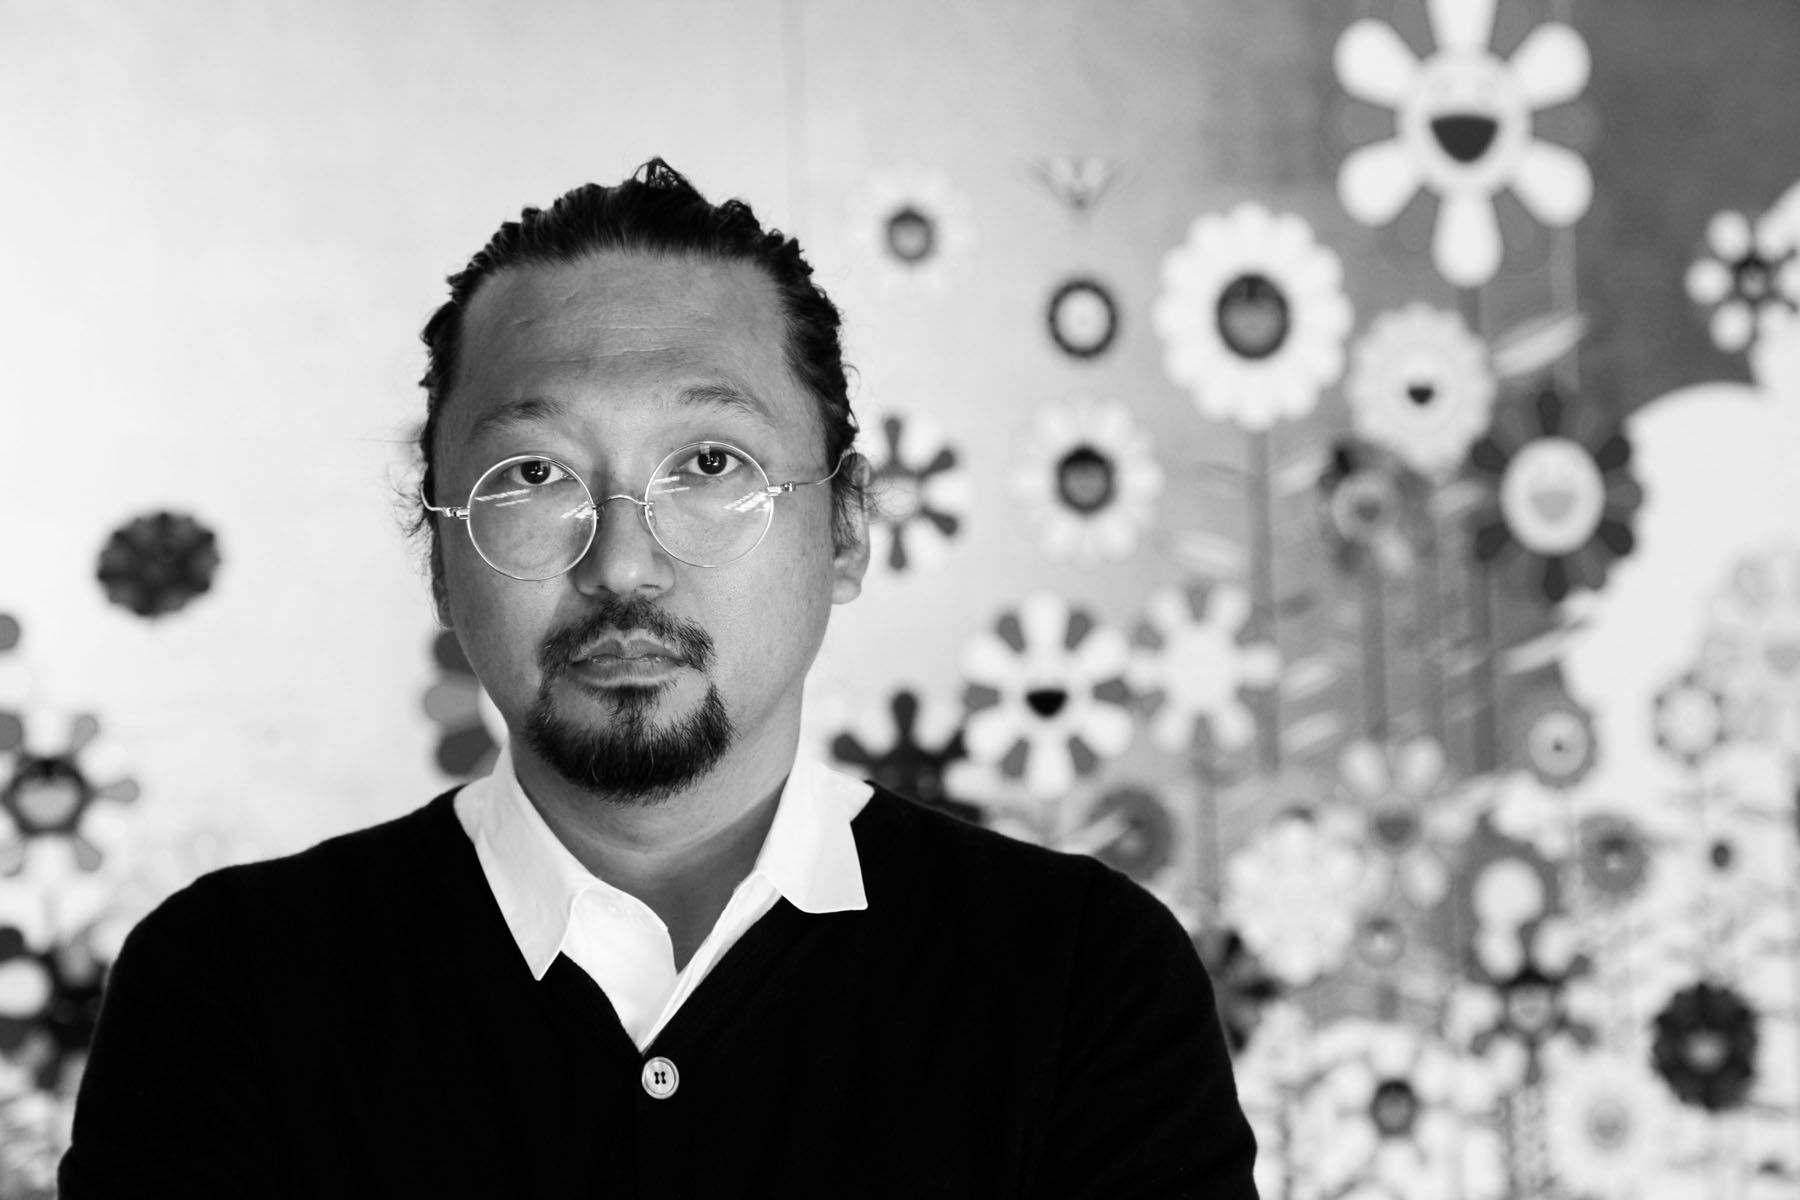 Takashi Murakami - profile & content on The Artling